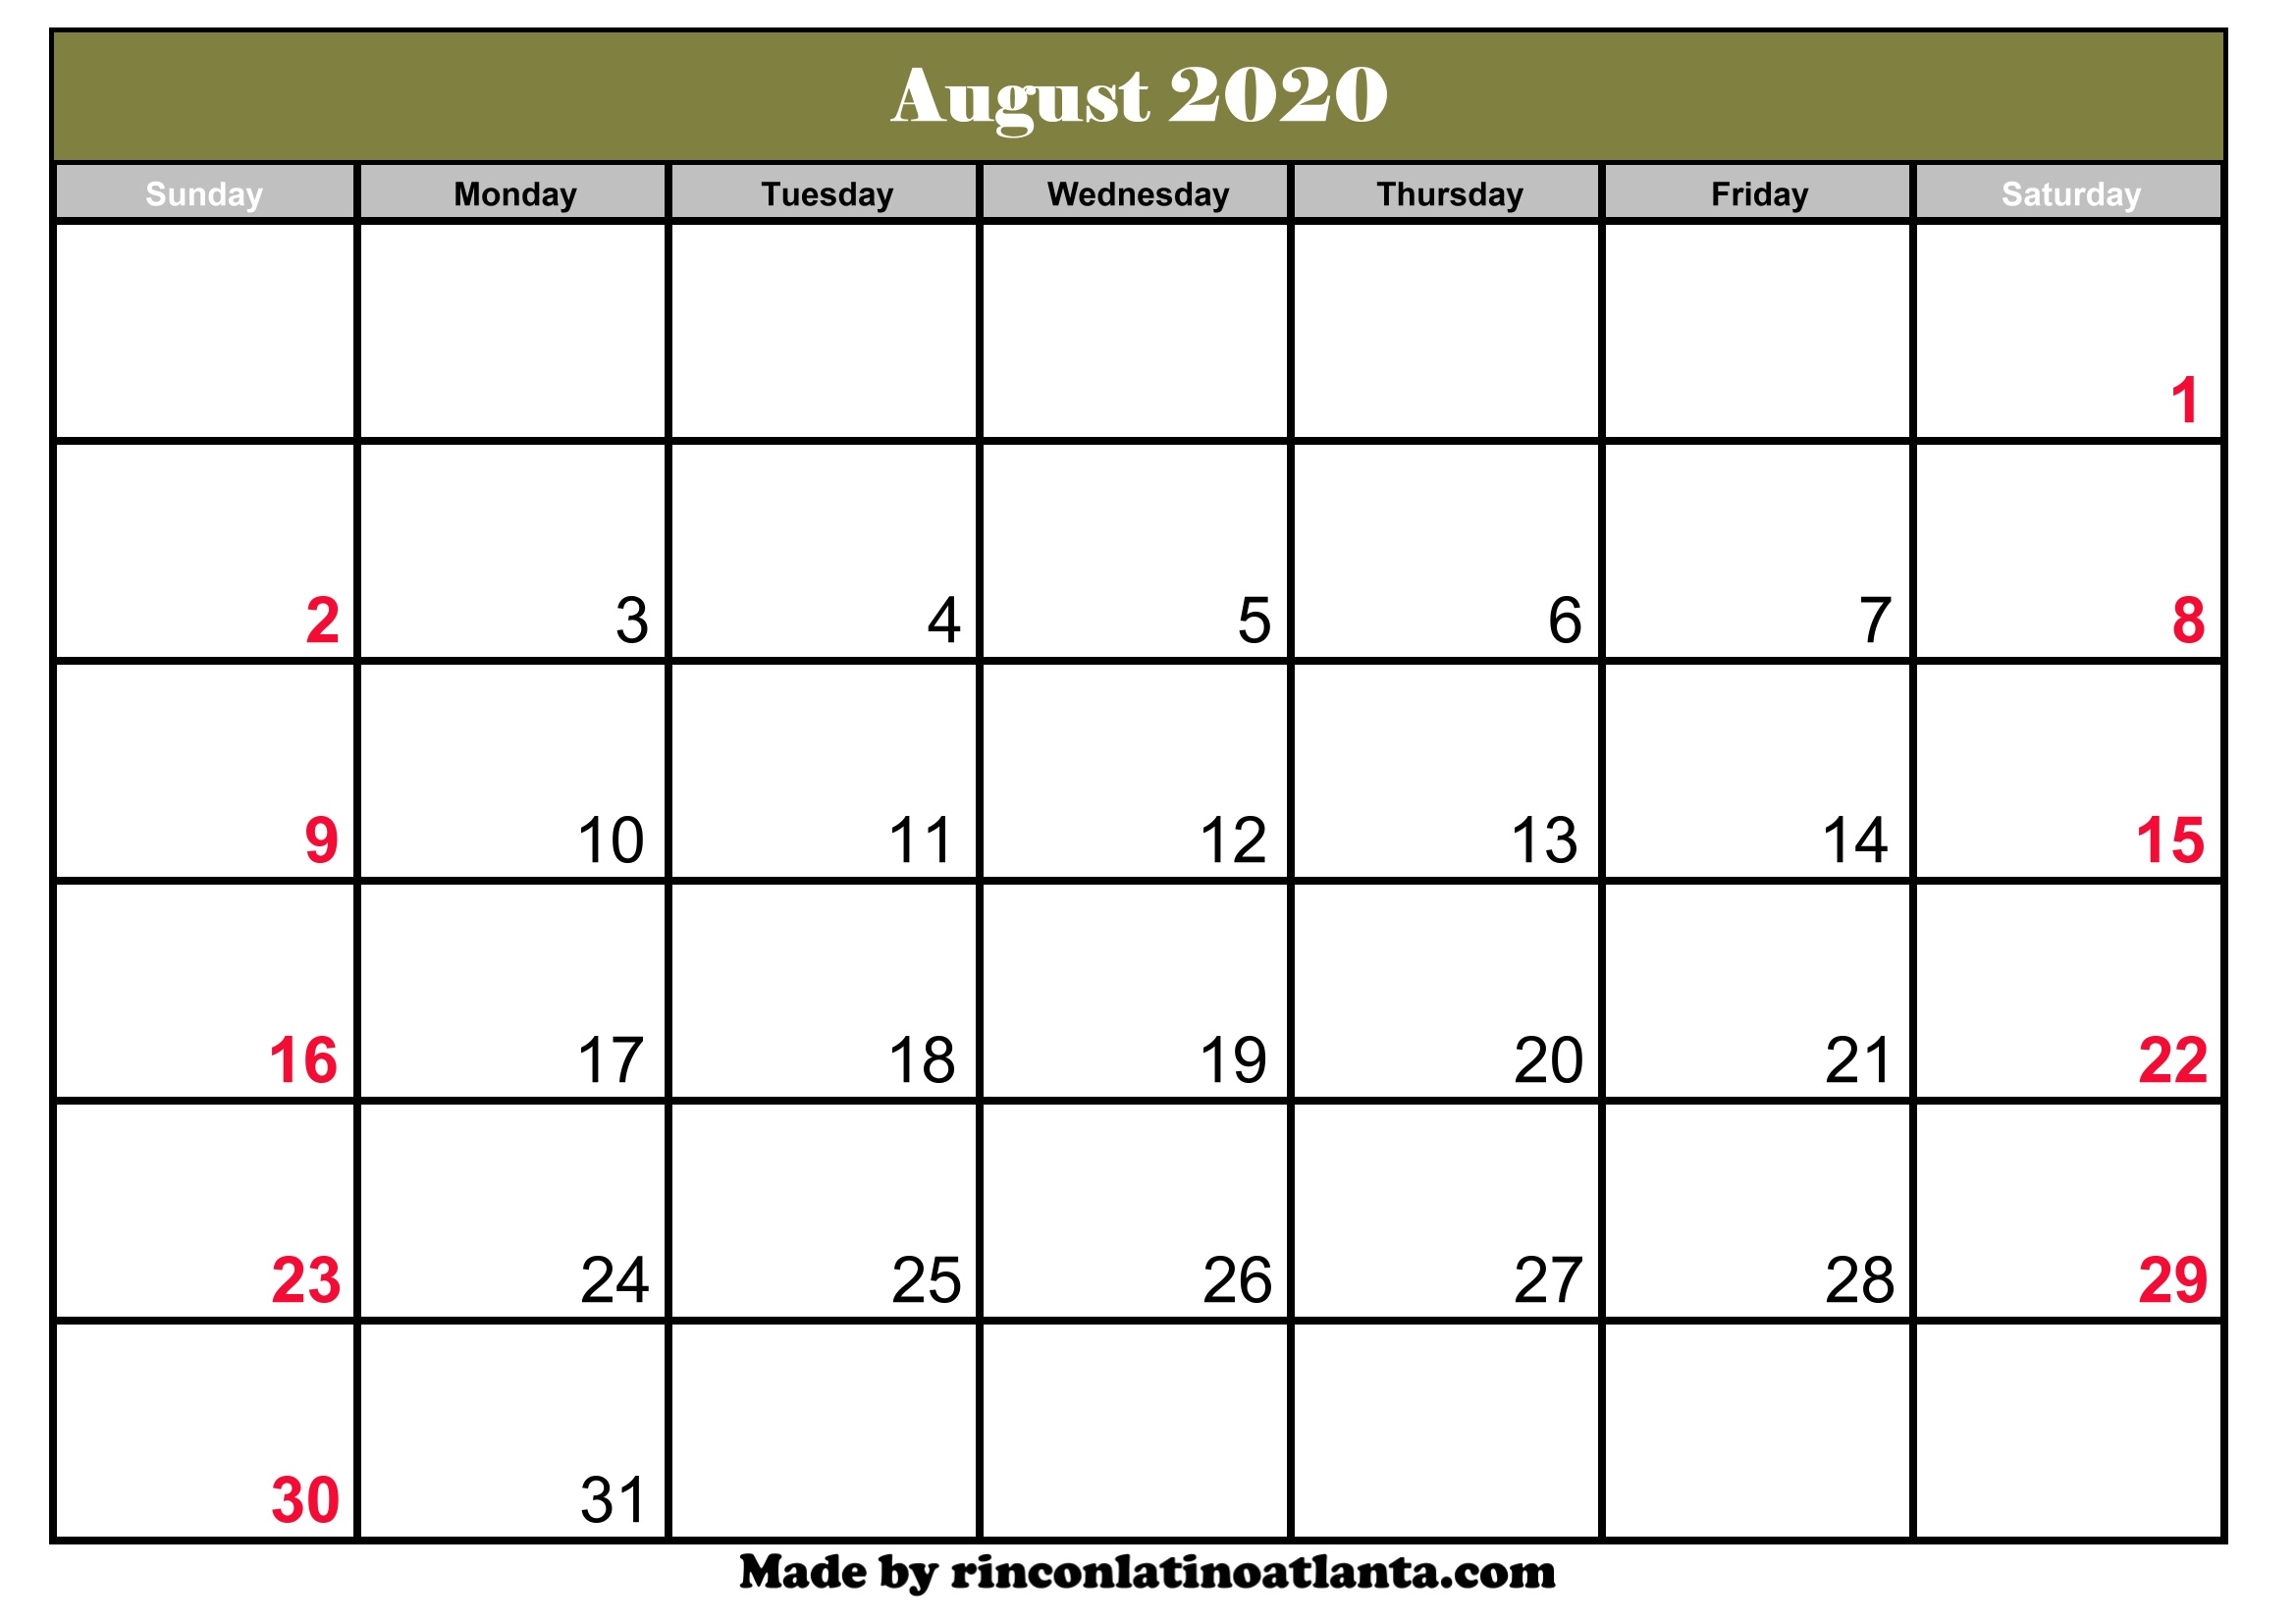 august 2020 calendar with holidays